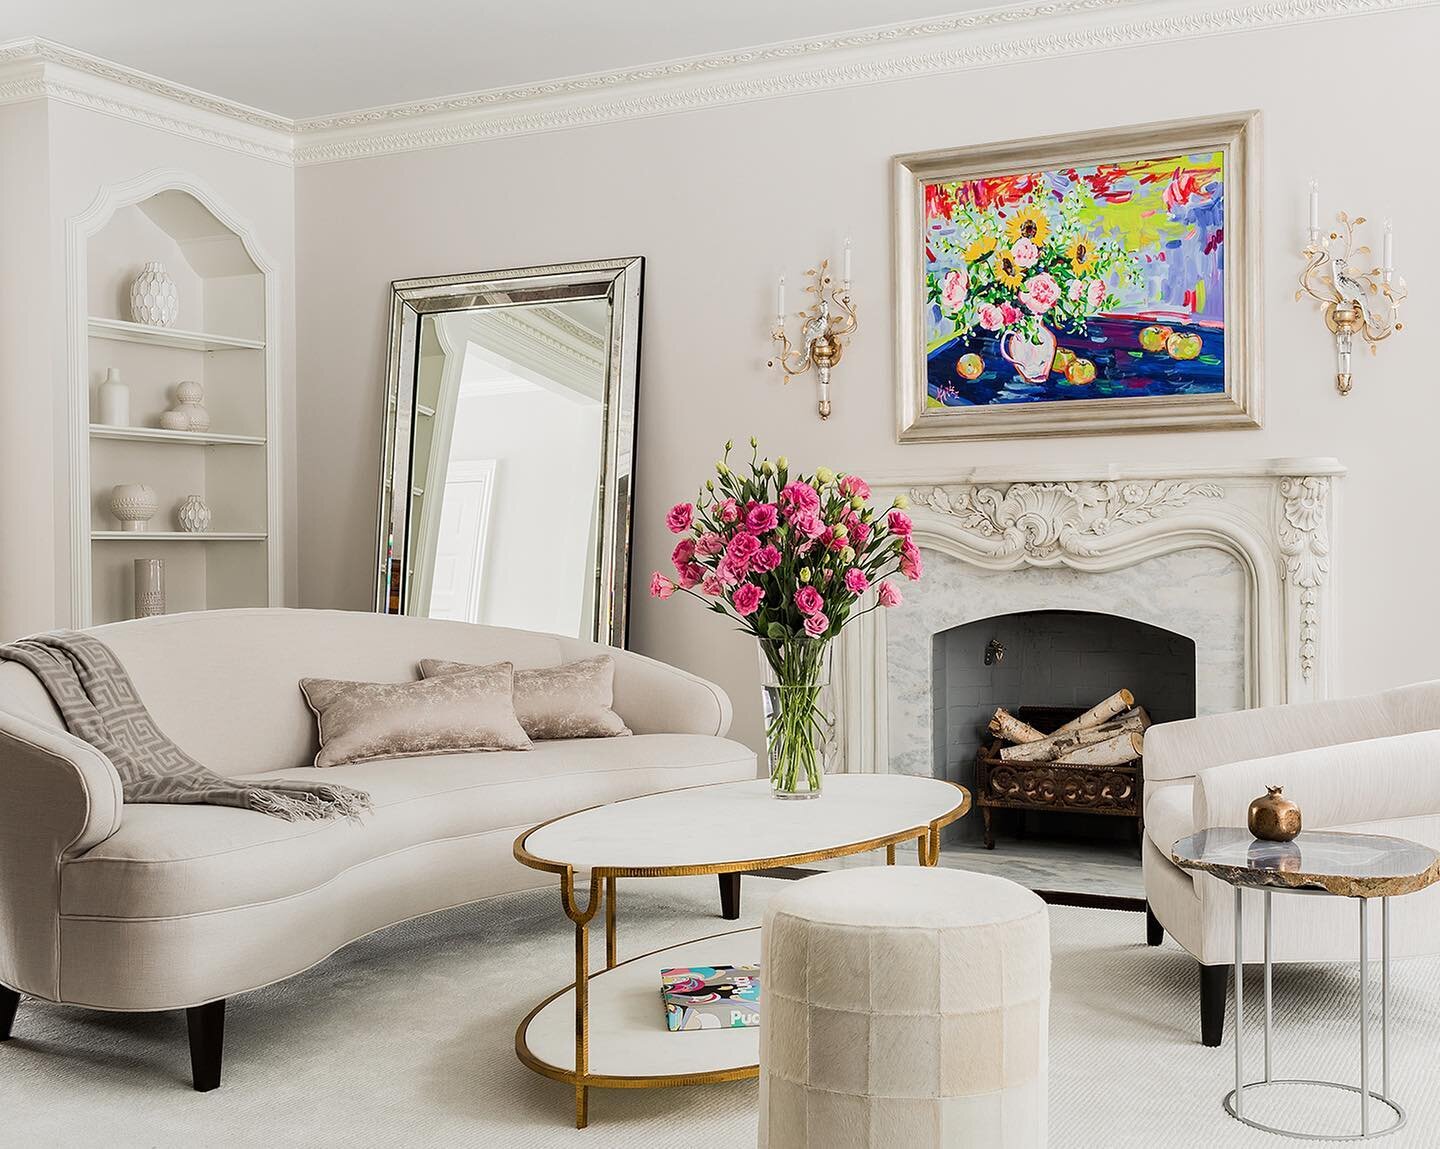 This crisp white on white living room is the epitome of modern elegance

📸 by @michaeljleephotography

.
.
.
#nancyhillinteriors #nancyhill #interiordesign #interiordesigner #interiordecorating #interiors #interior #design #decor #homedecor #home #l